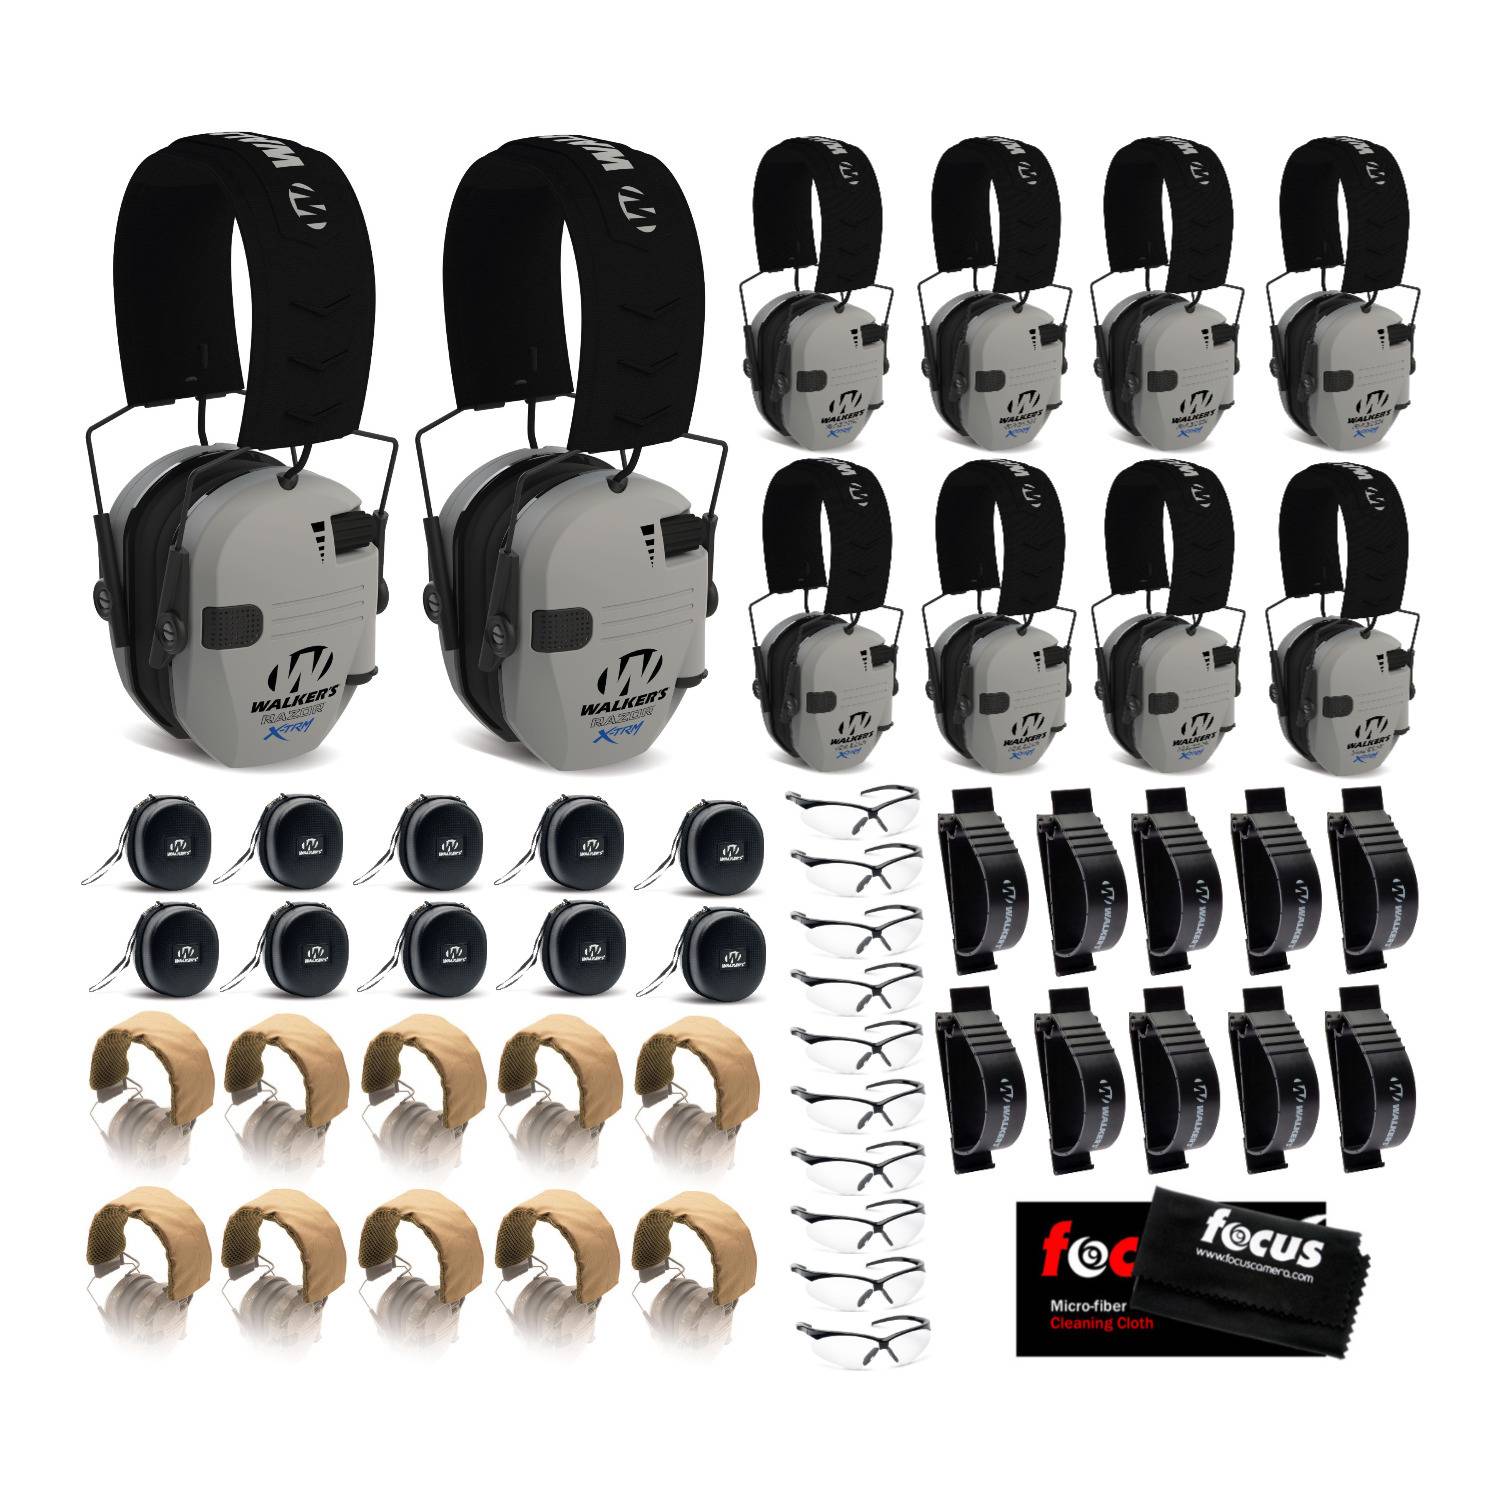 Walker's Razor X-TRM Digital Ear Muffs (Gray) Travel Bundle (10-Pack)